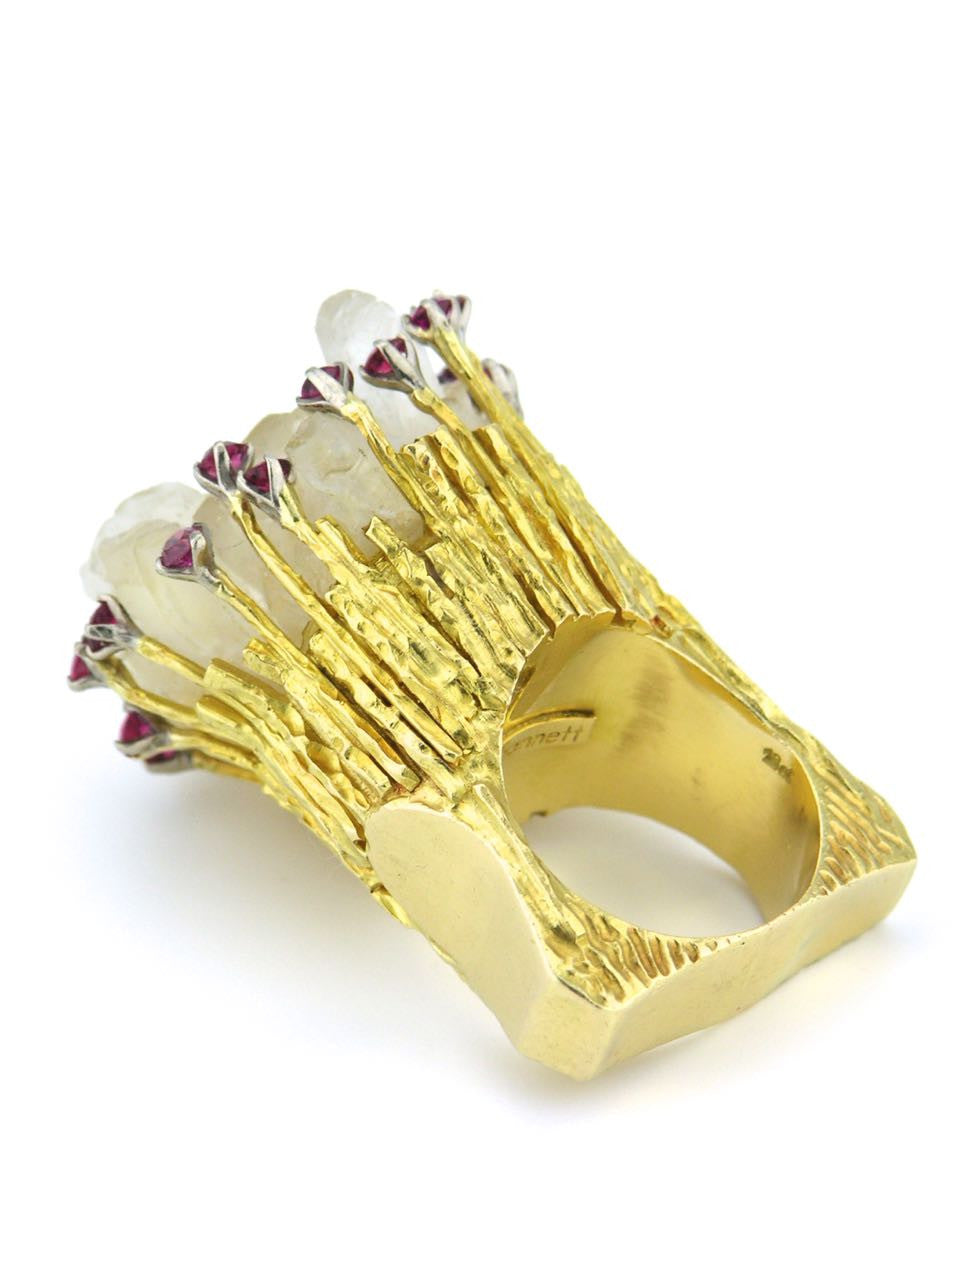 Australian large gold, quartz and ruby organic 70's knuckleduster ring - Rob Bennett